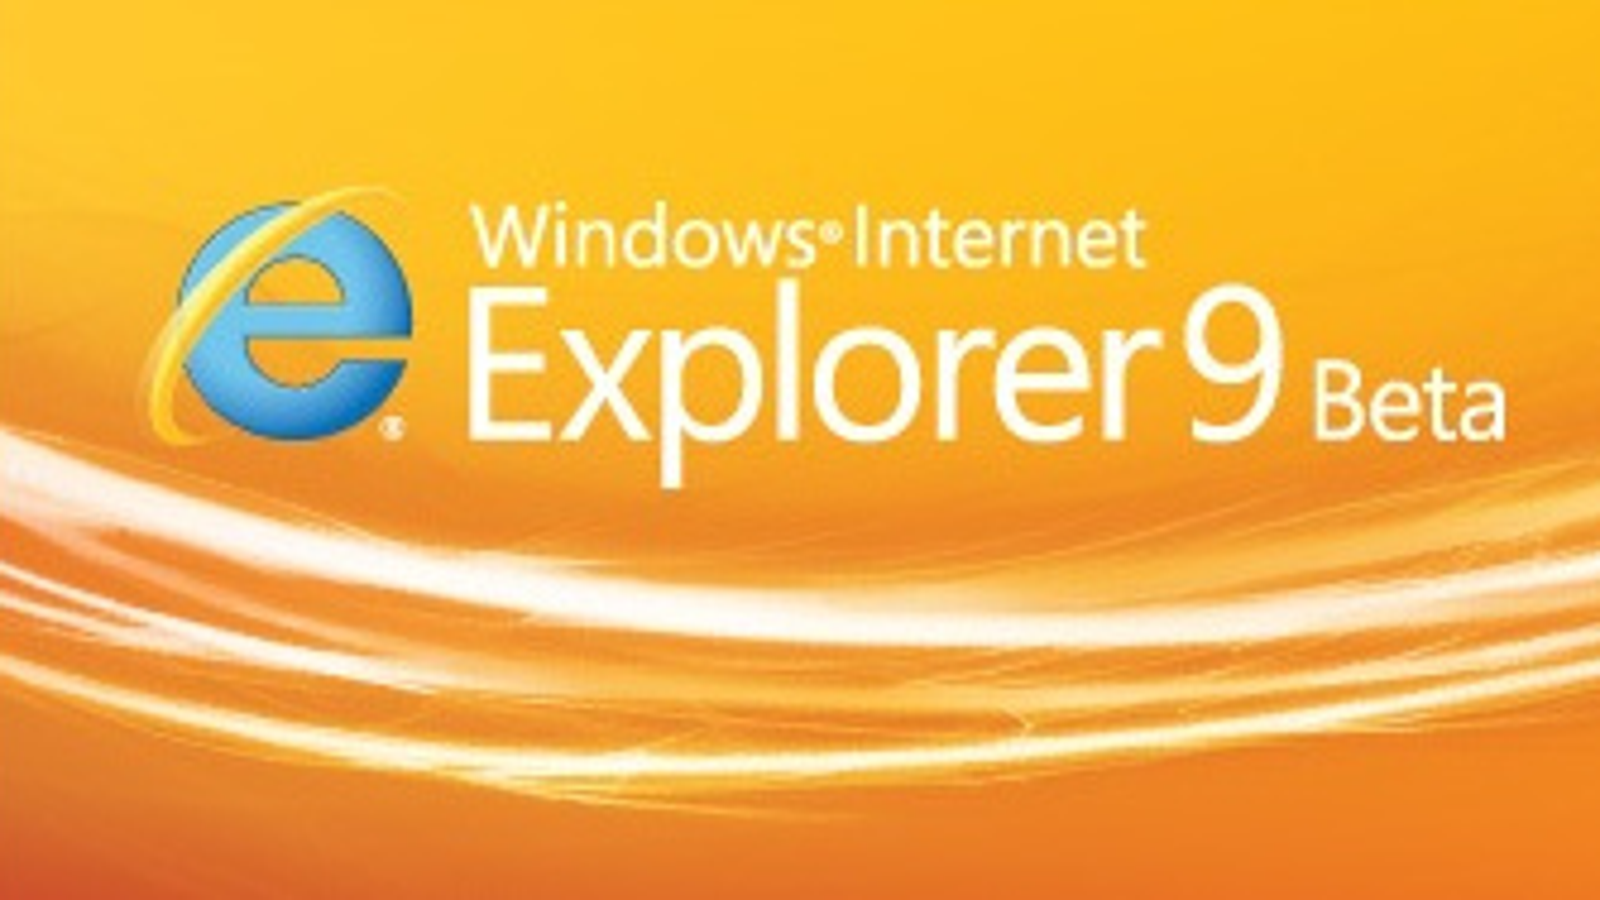 download internet explorer 9 for window 7 64 bit